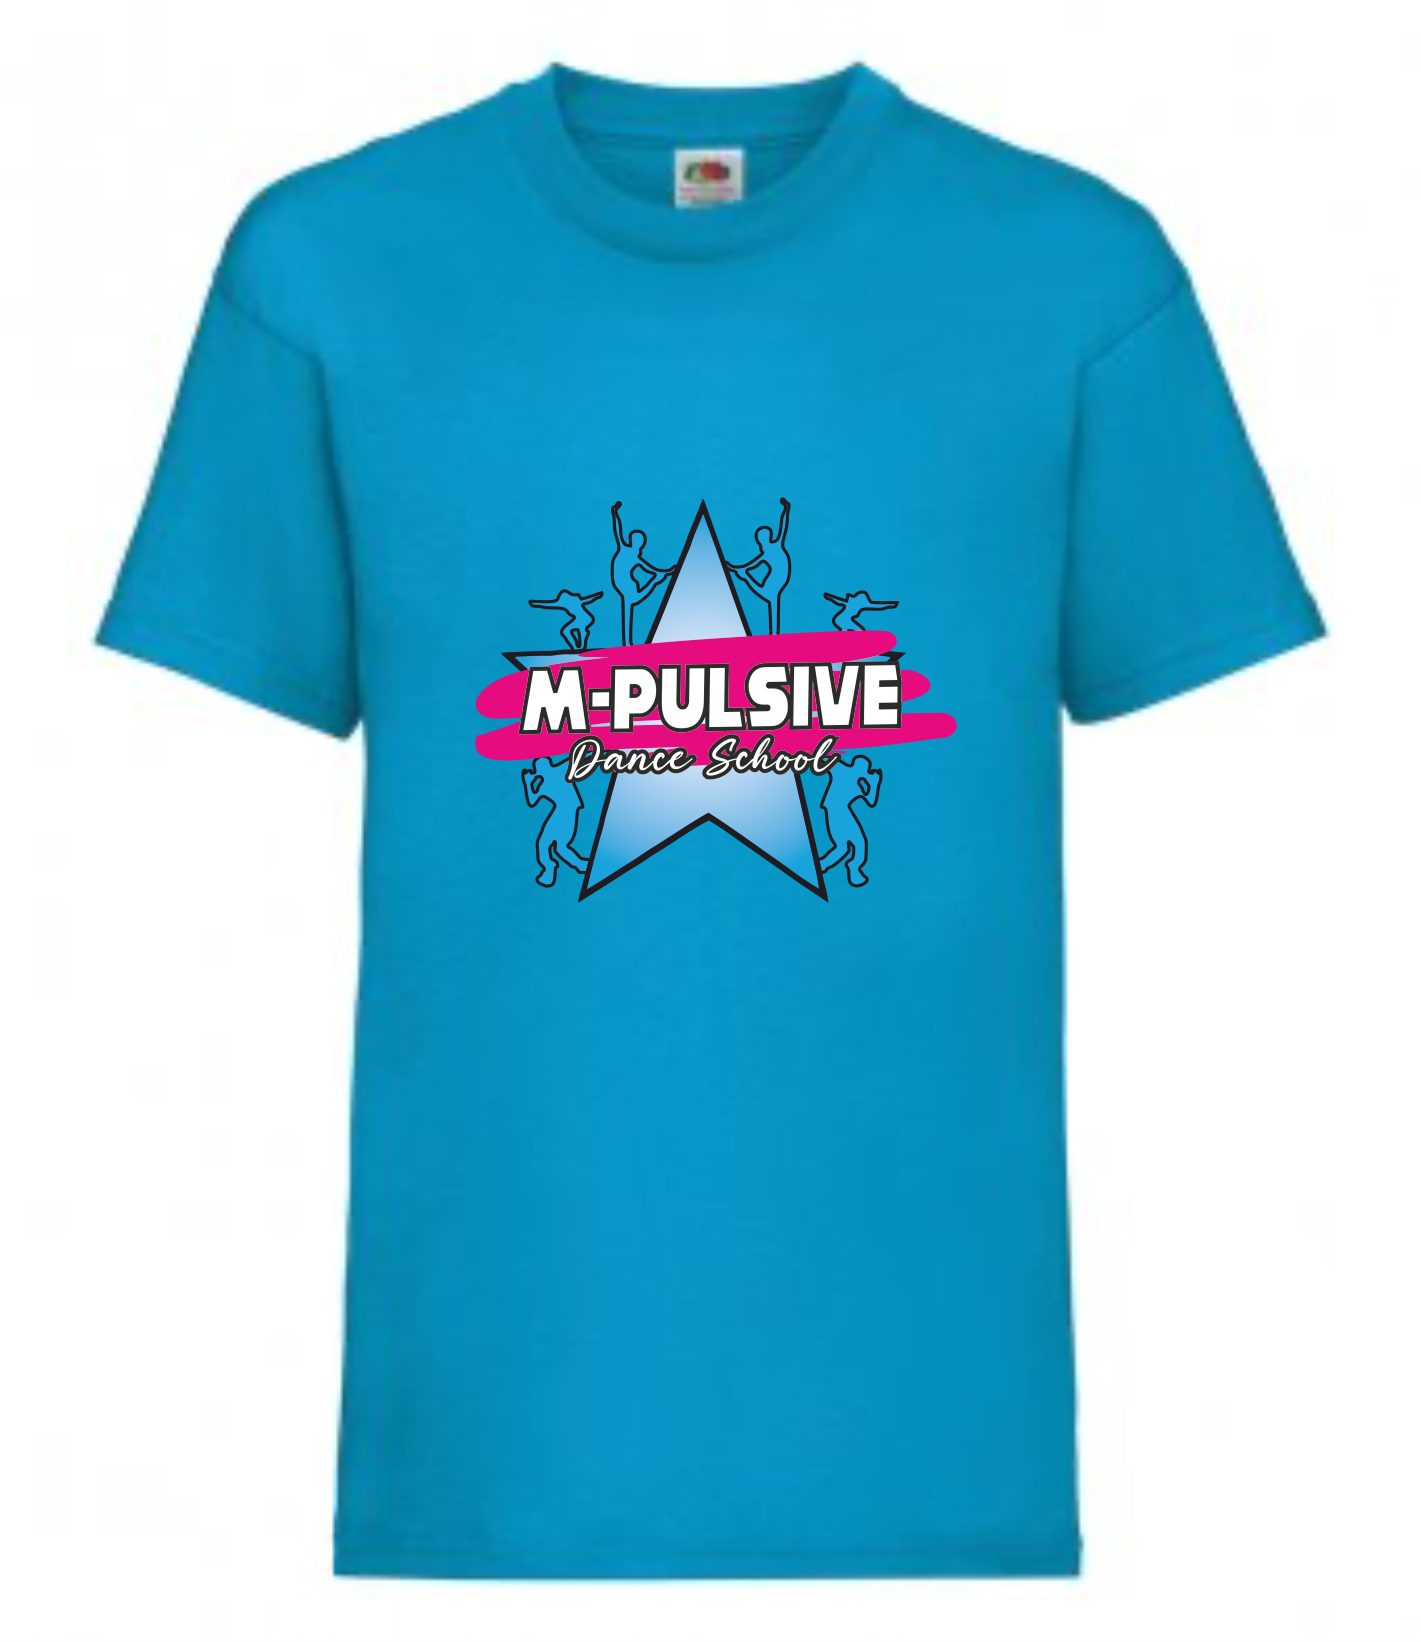 M-Pulsive T-shirt (kids sizes)